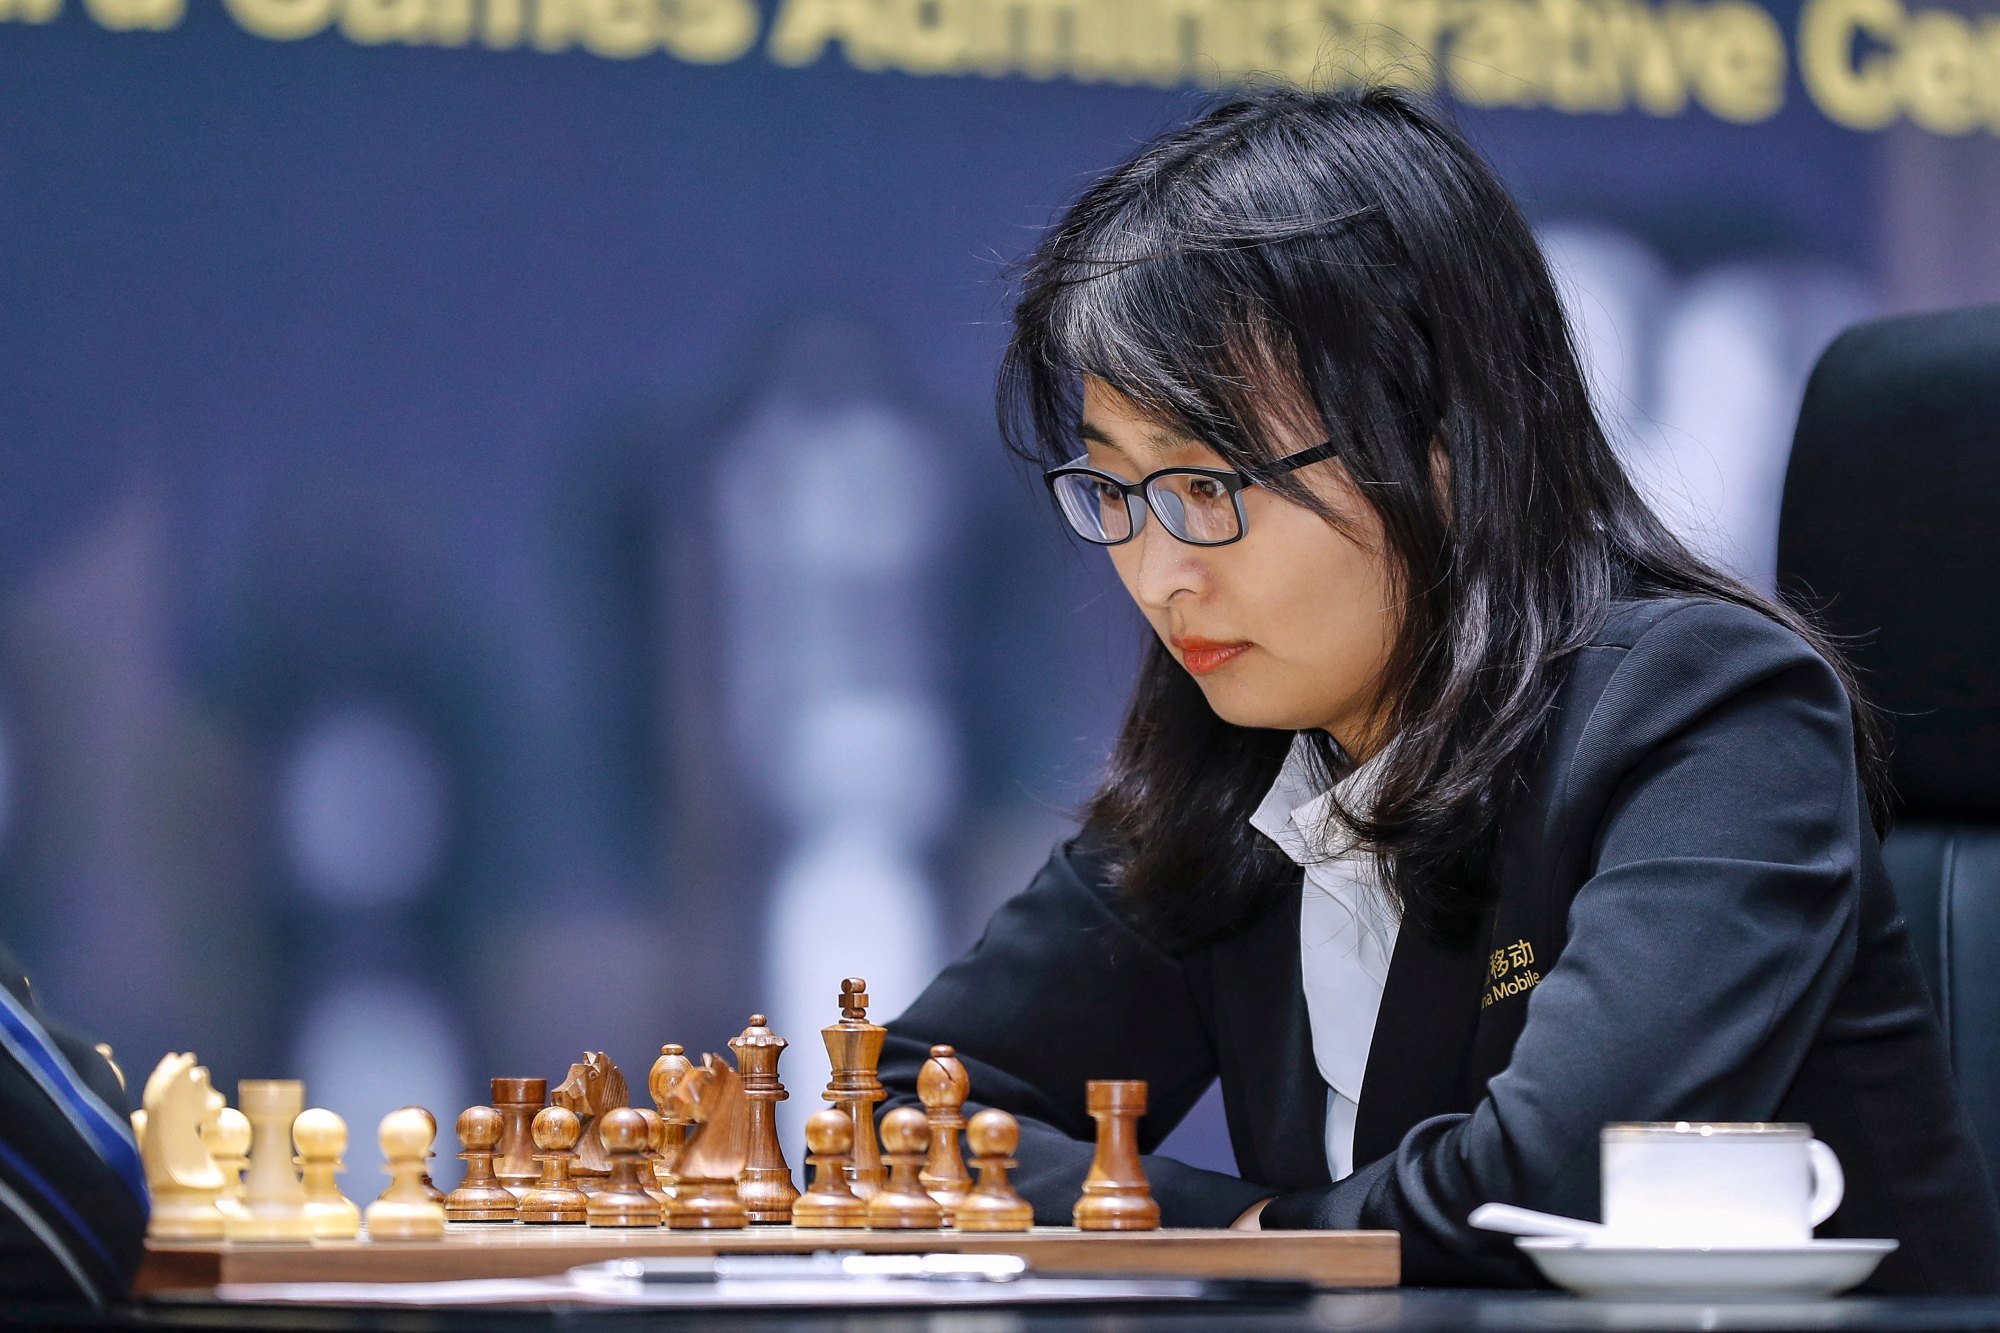 Ju Wenjun is the 17th Women's World Champion